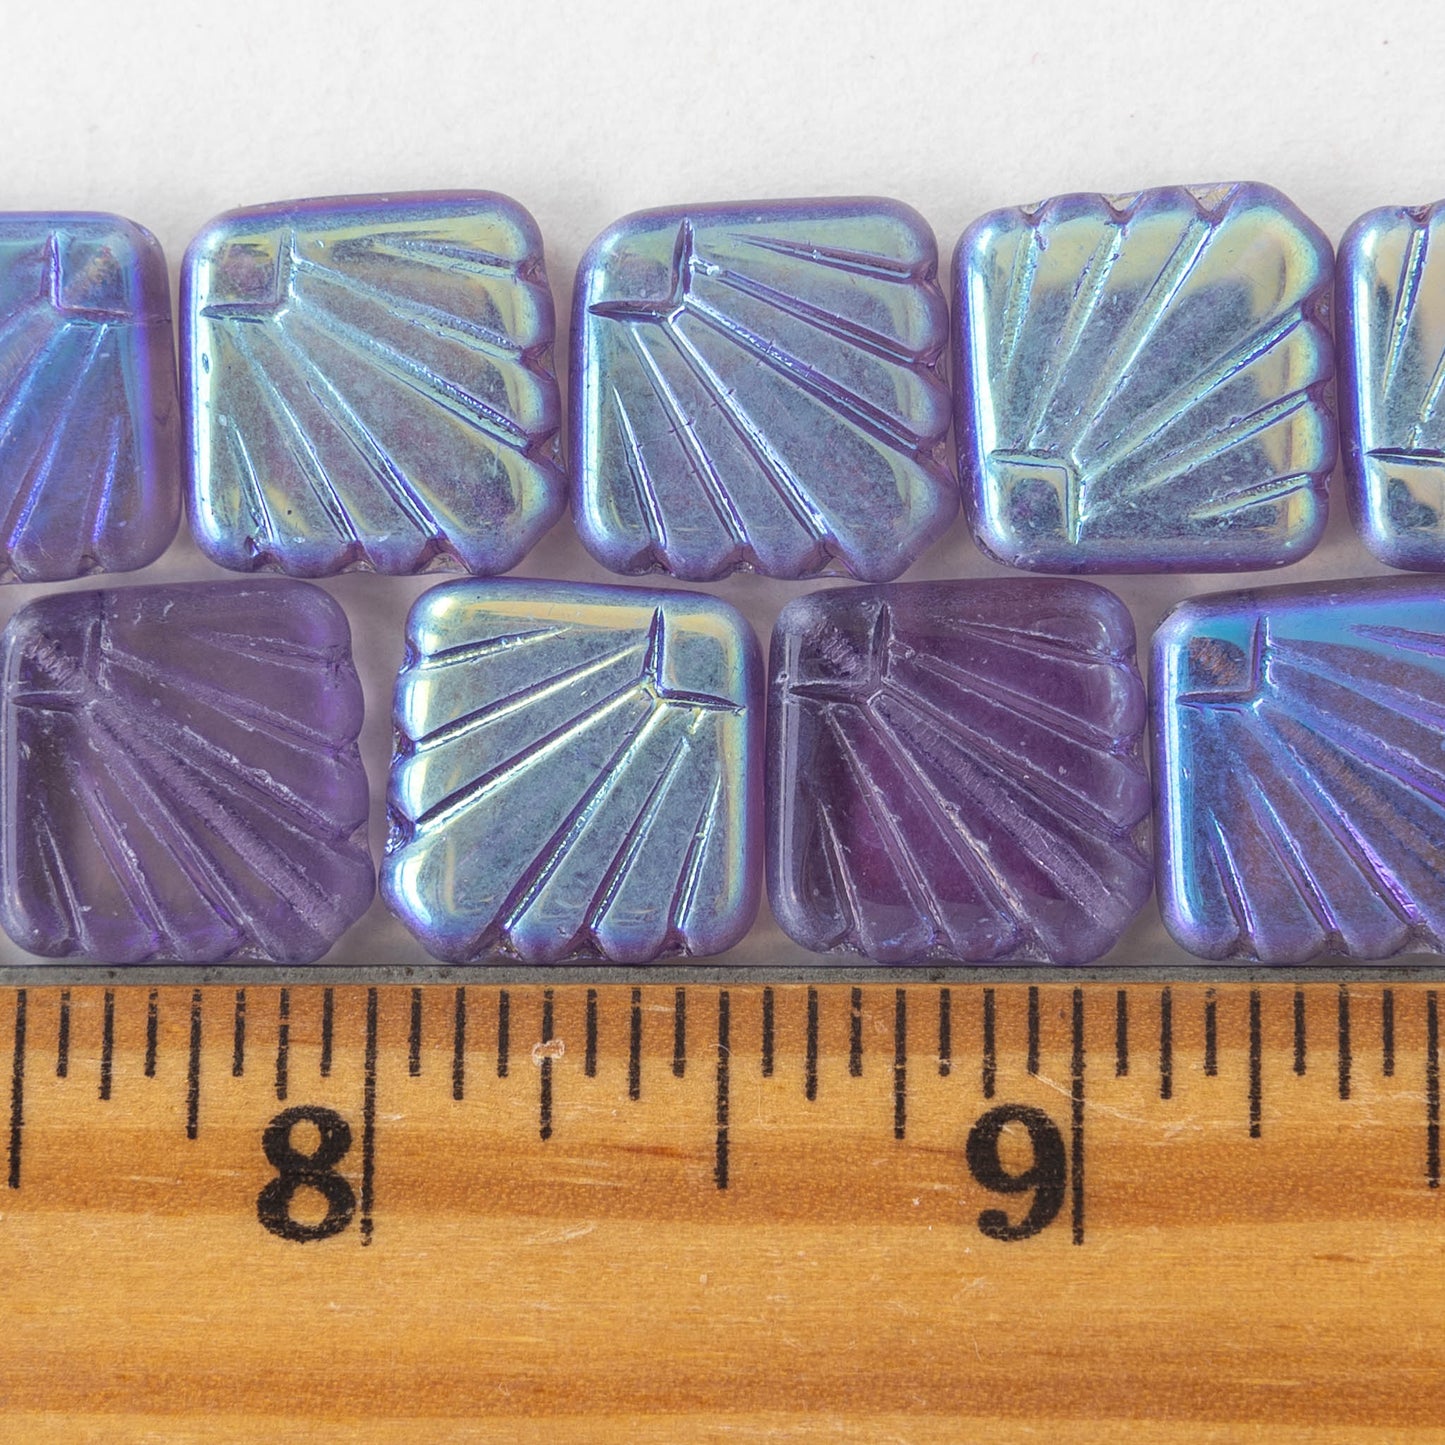 14mm Diafan Beads - Lilac Purple AB - 10 beads